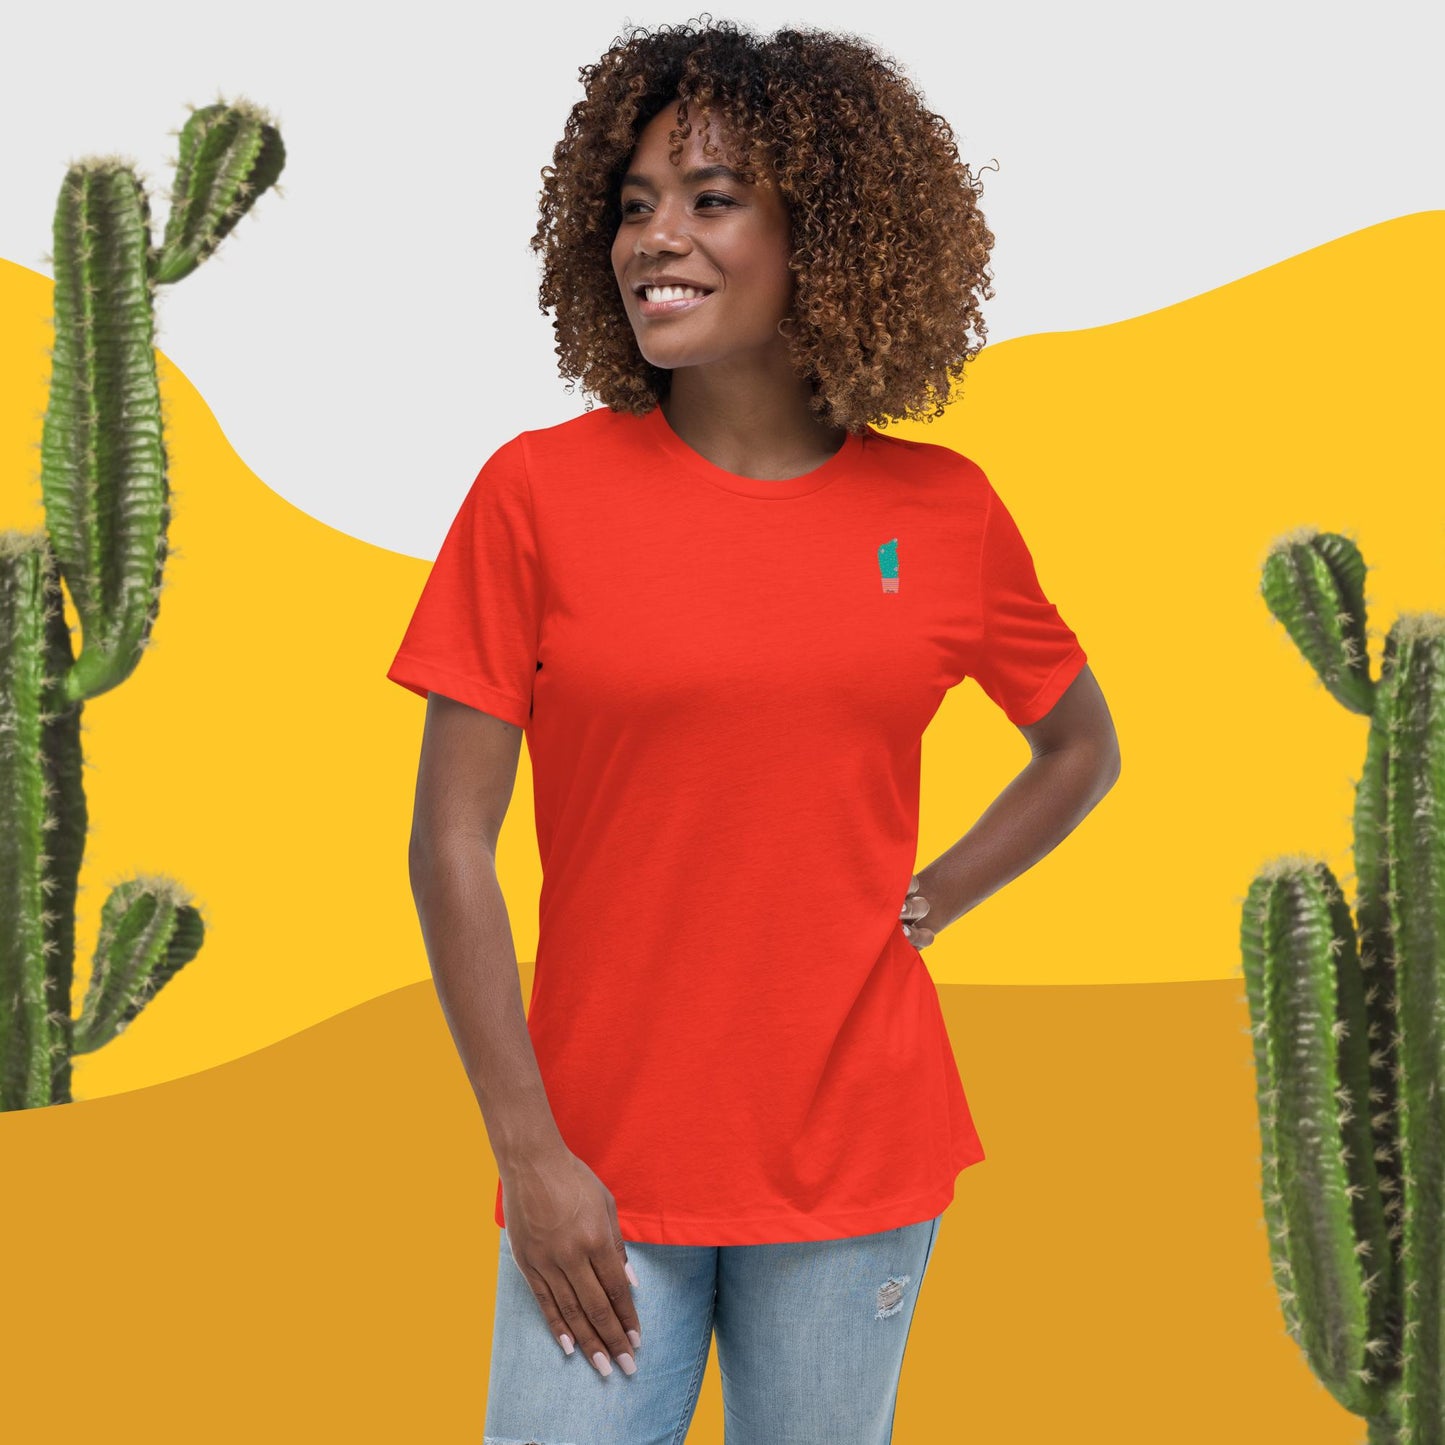 Sharp by Design 'Pricks' No.3 – Women's Relaxed T-Shirt